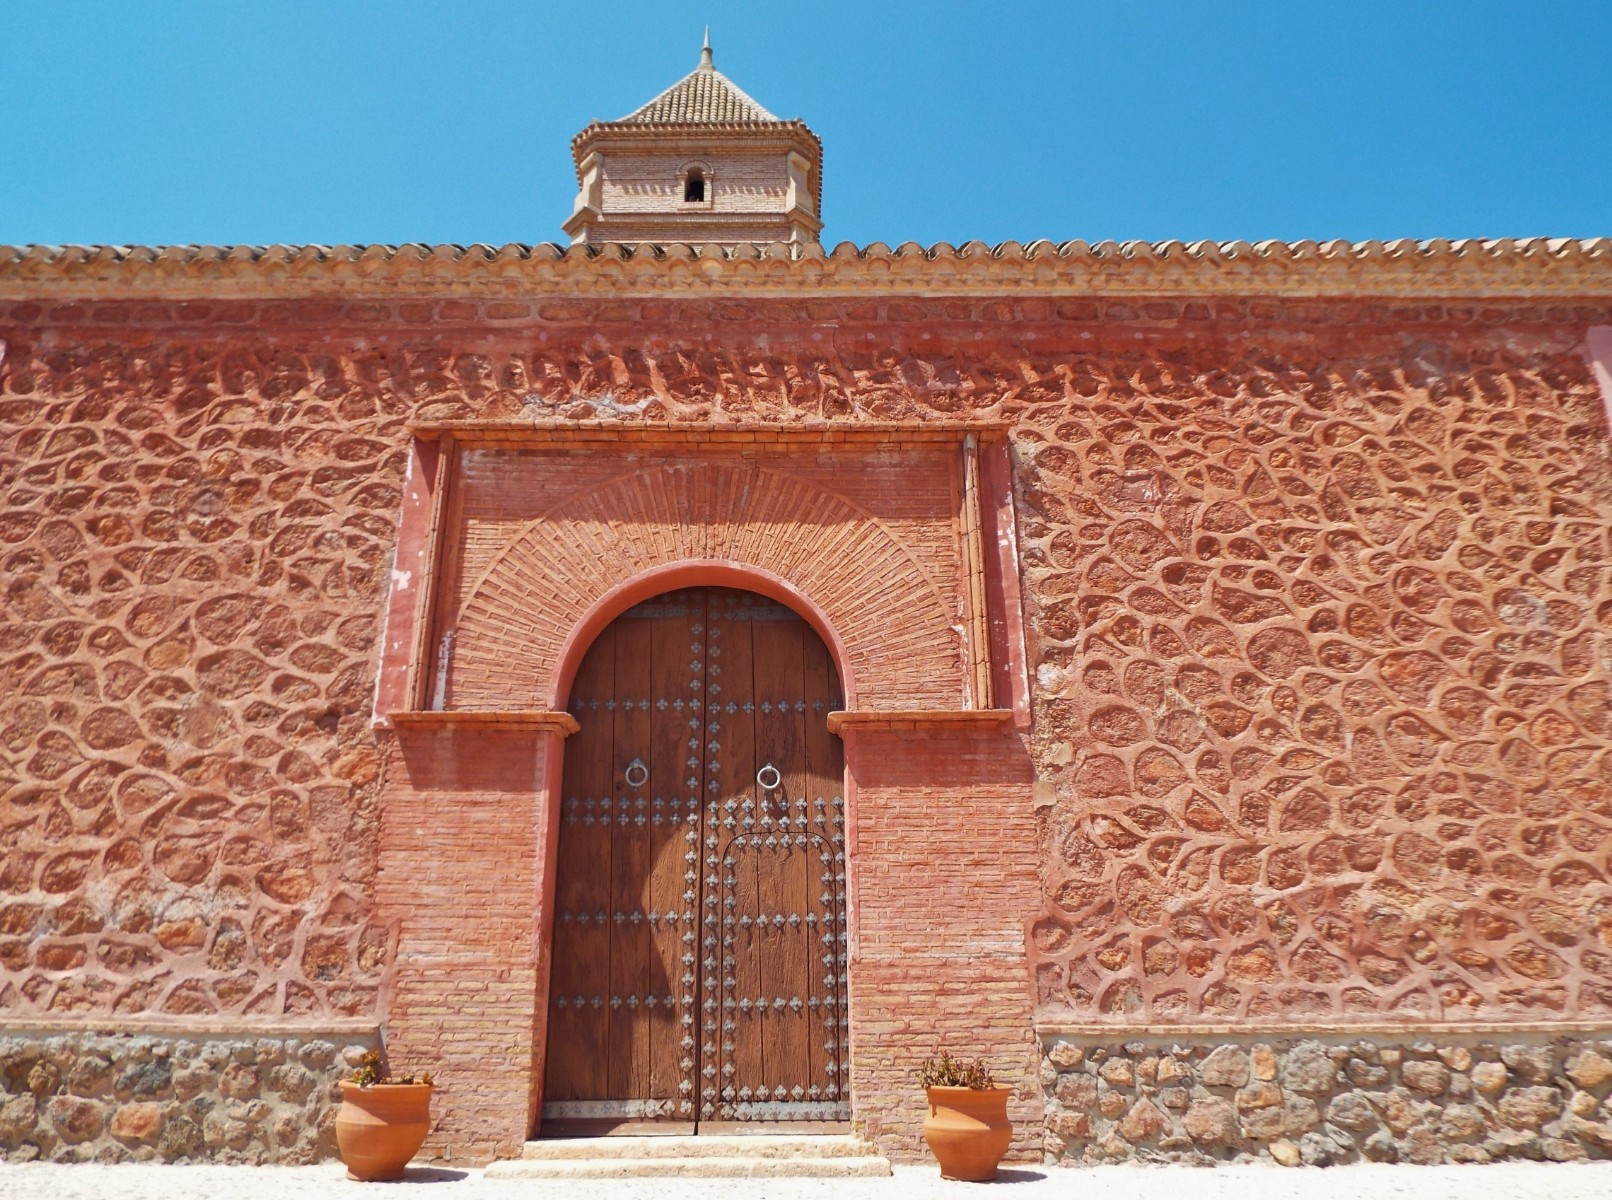 Monastry doors, Door | Architecture | Wood | History | Monk | People | Travel | Sky | Blue | Roof | Tile | Metal | Spain